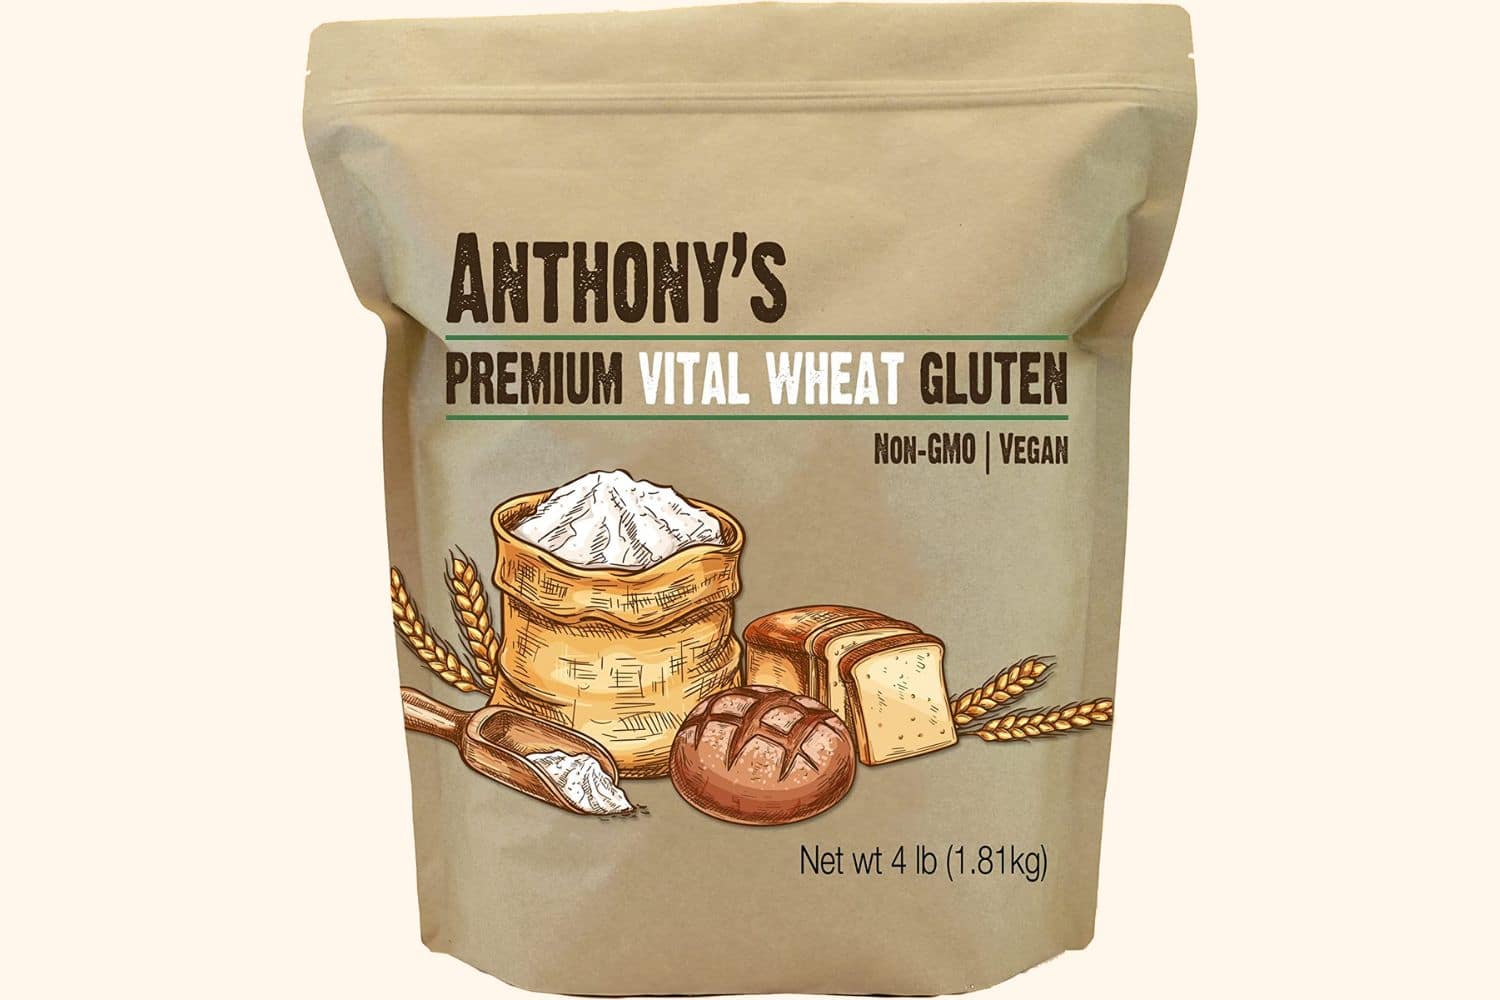 Anthony’s Vital Wheat Gluten